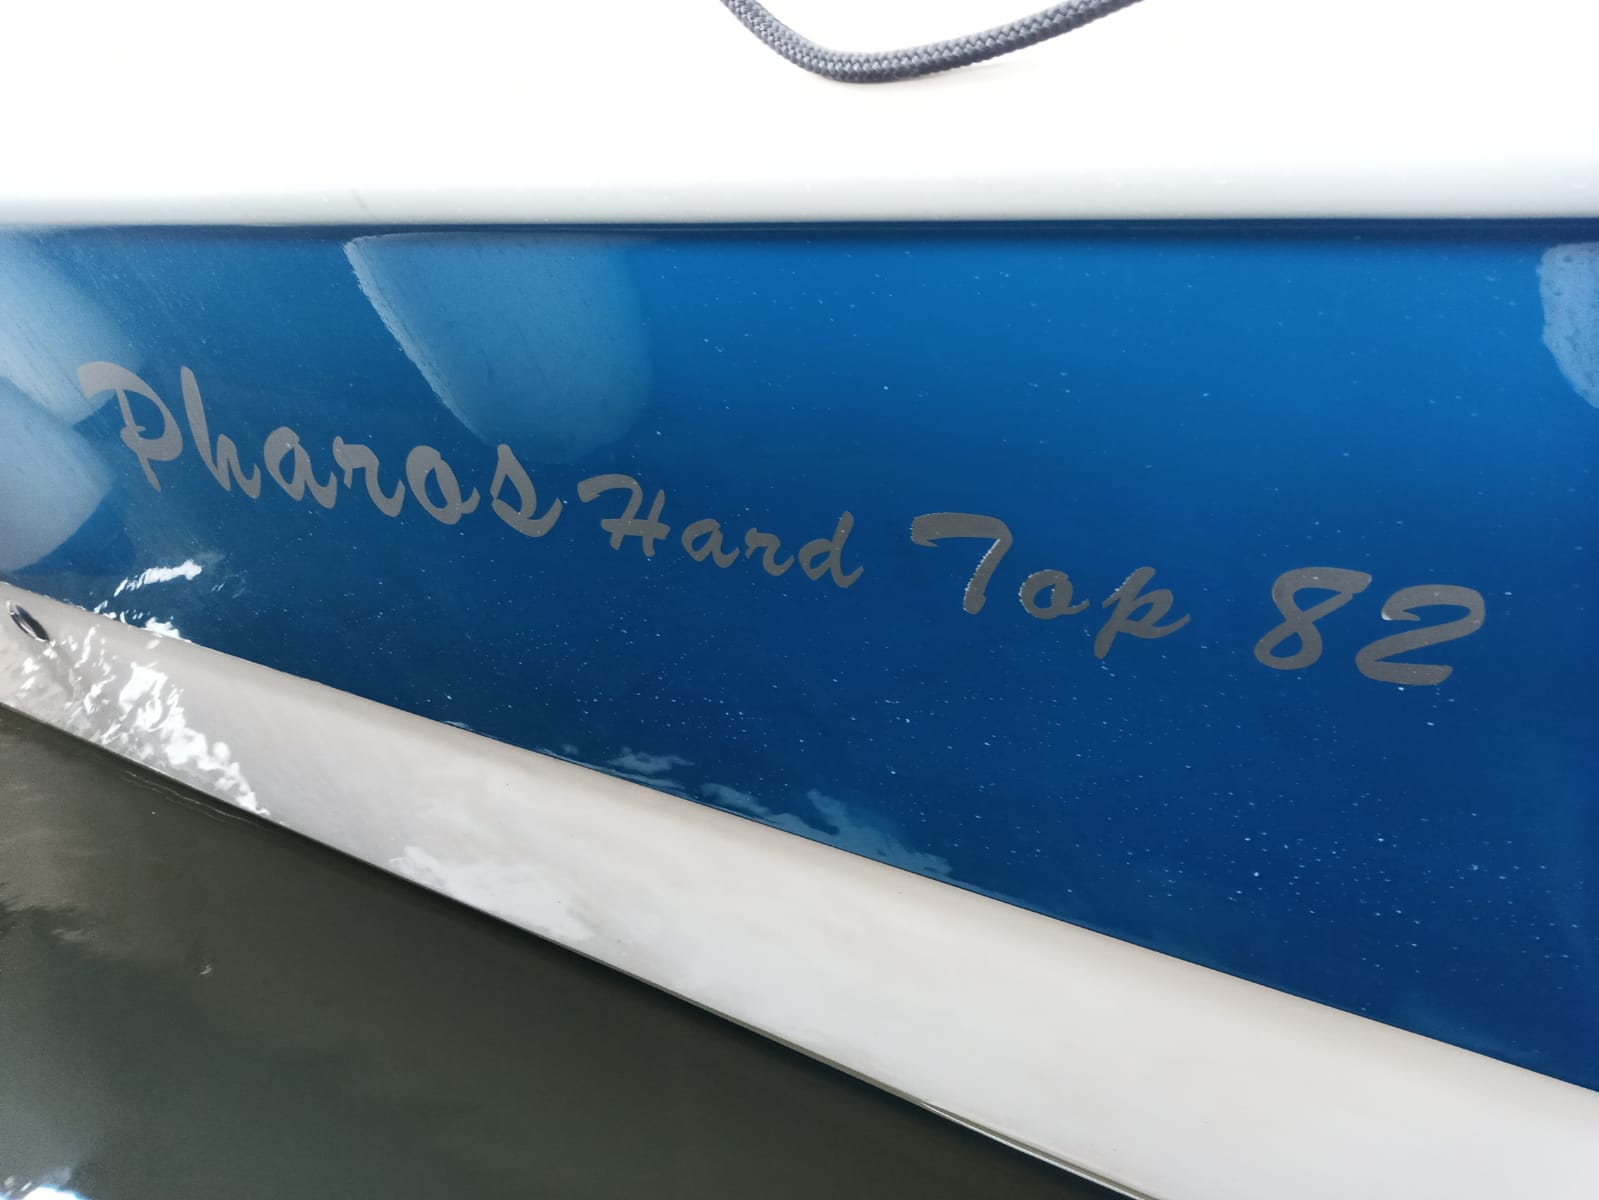 phaos hard top 82 honda 135 hp livorno boats boat barco bateaux natante used second hand